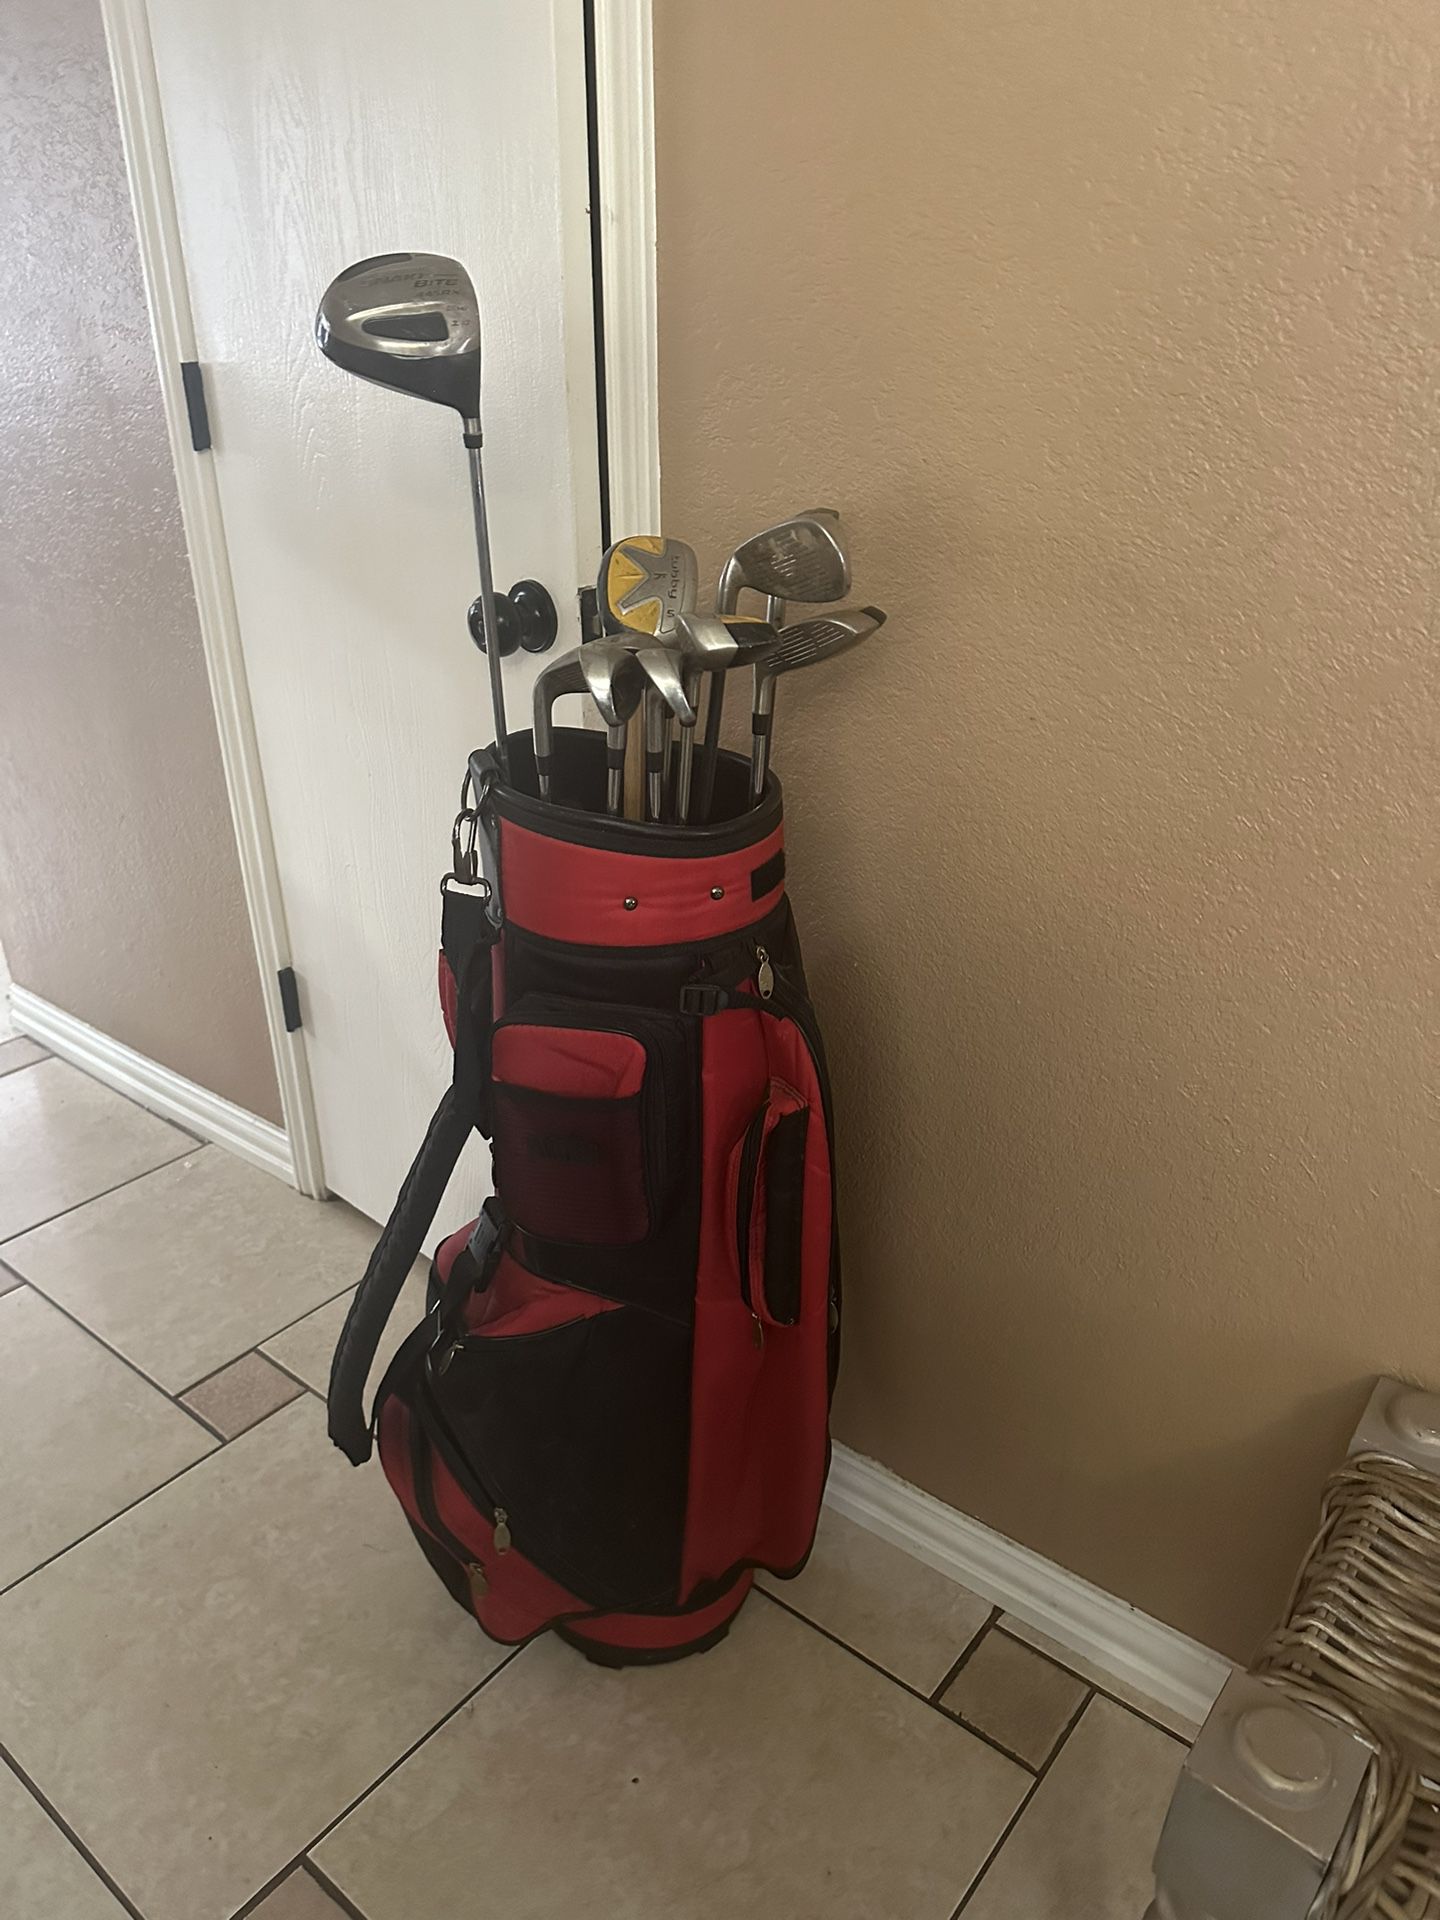 Golf Clubs Set And Bag